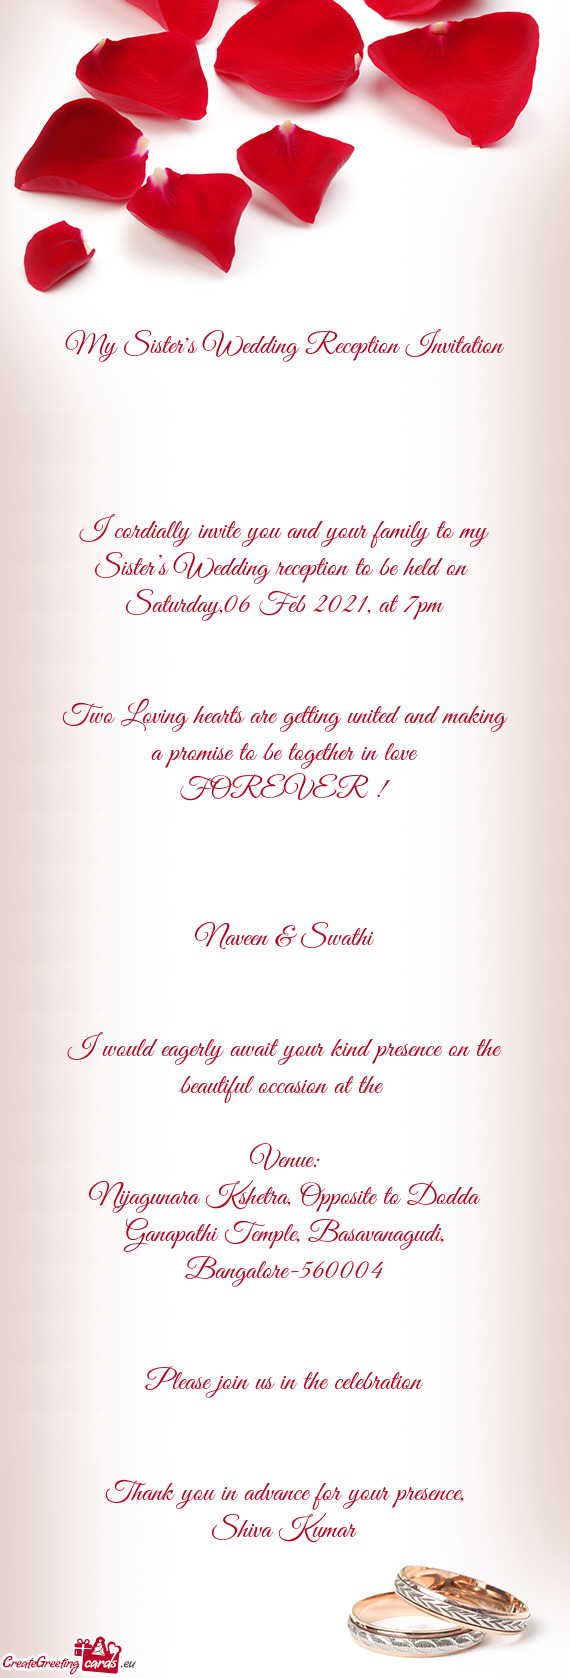 My Sister's Wedding Reception Invitation - Free cards